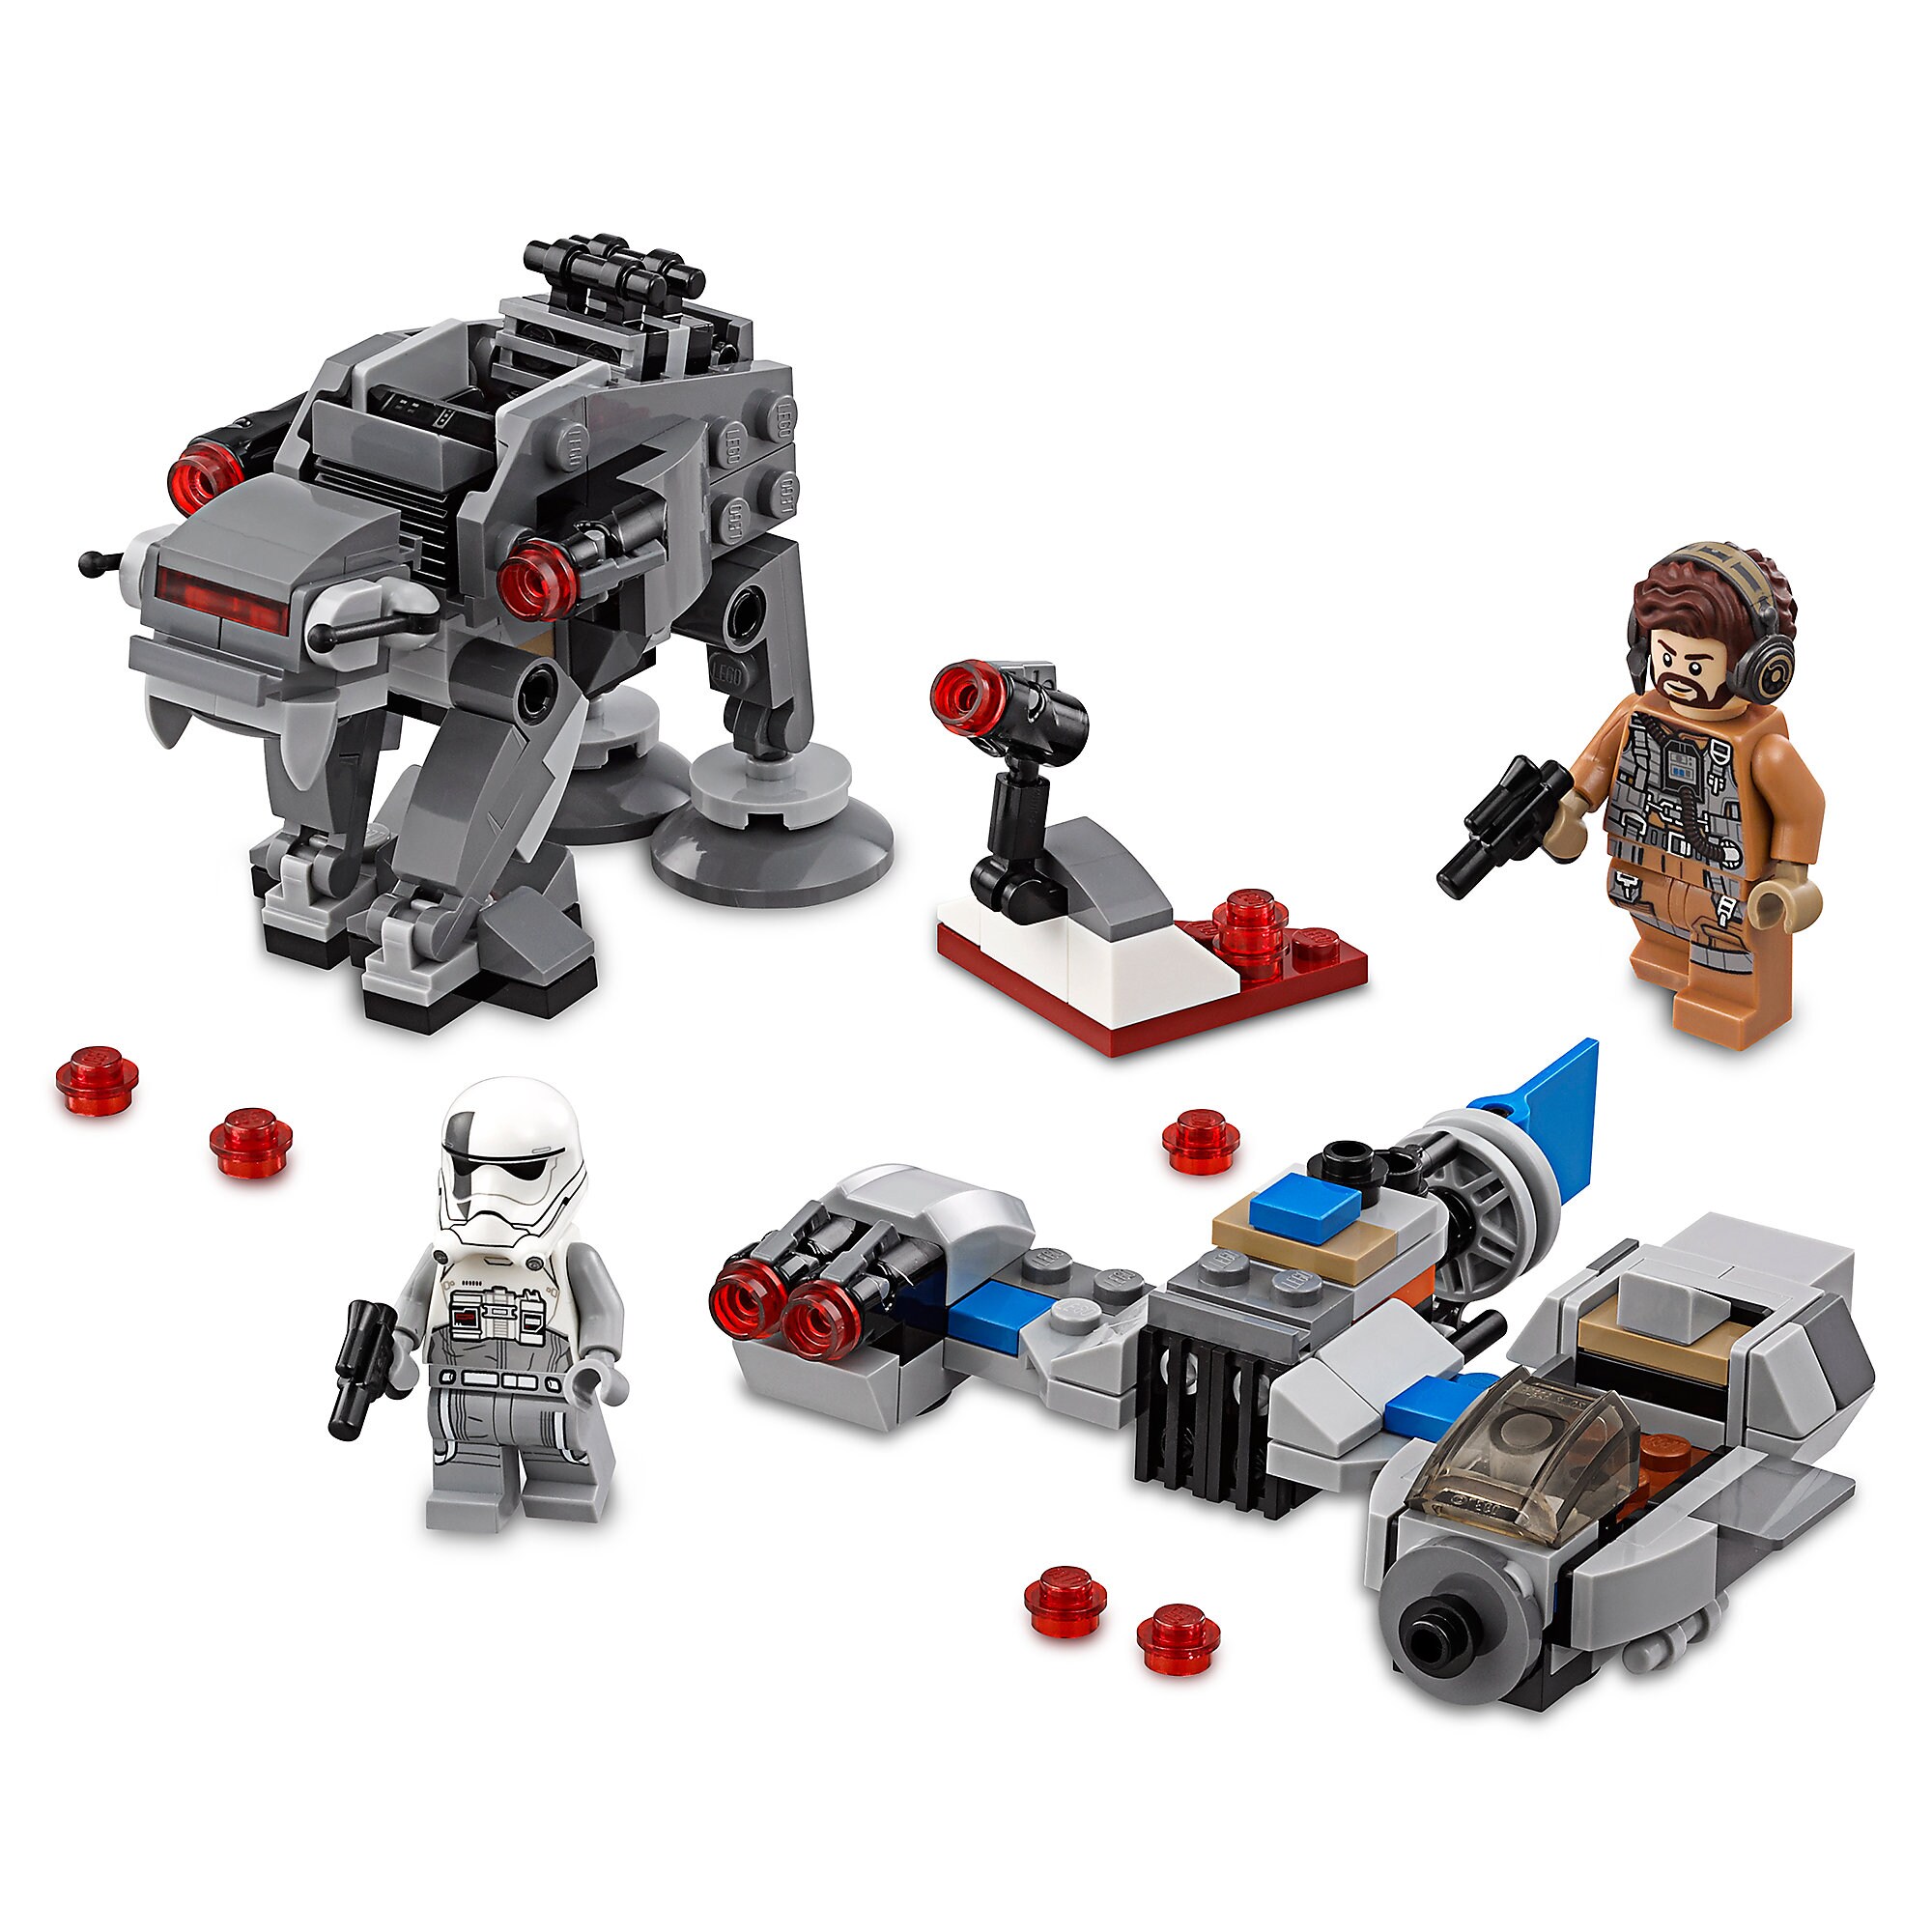 Ski Speeder vs. First Order Walker Microfighters Playset by LEGO - Star Wars: The Last Jedi